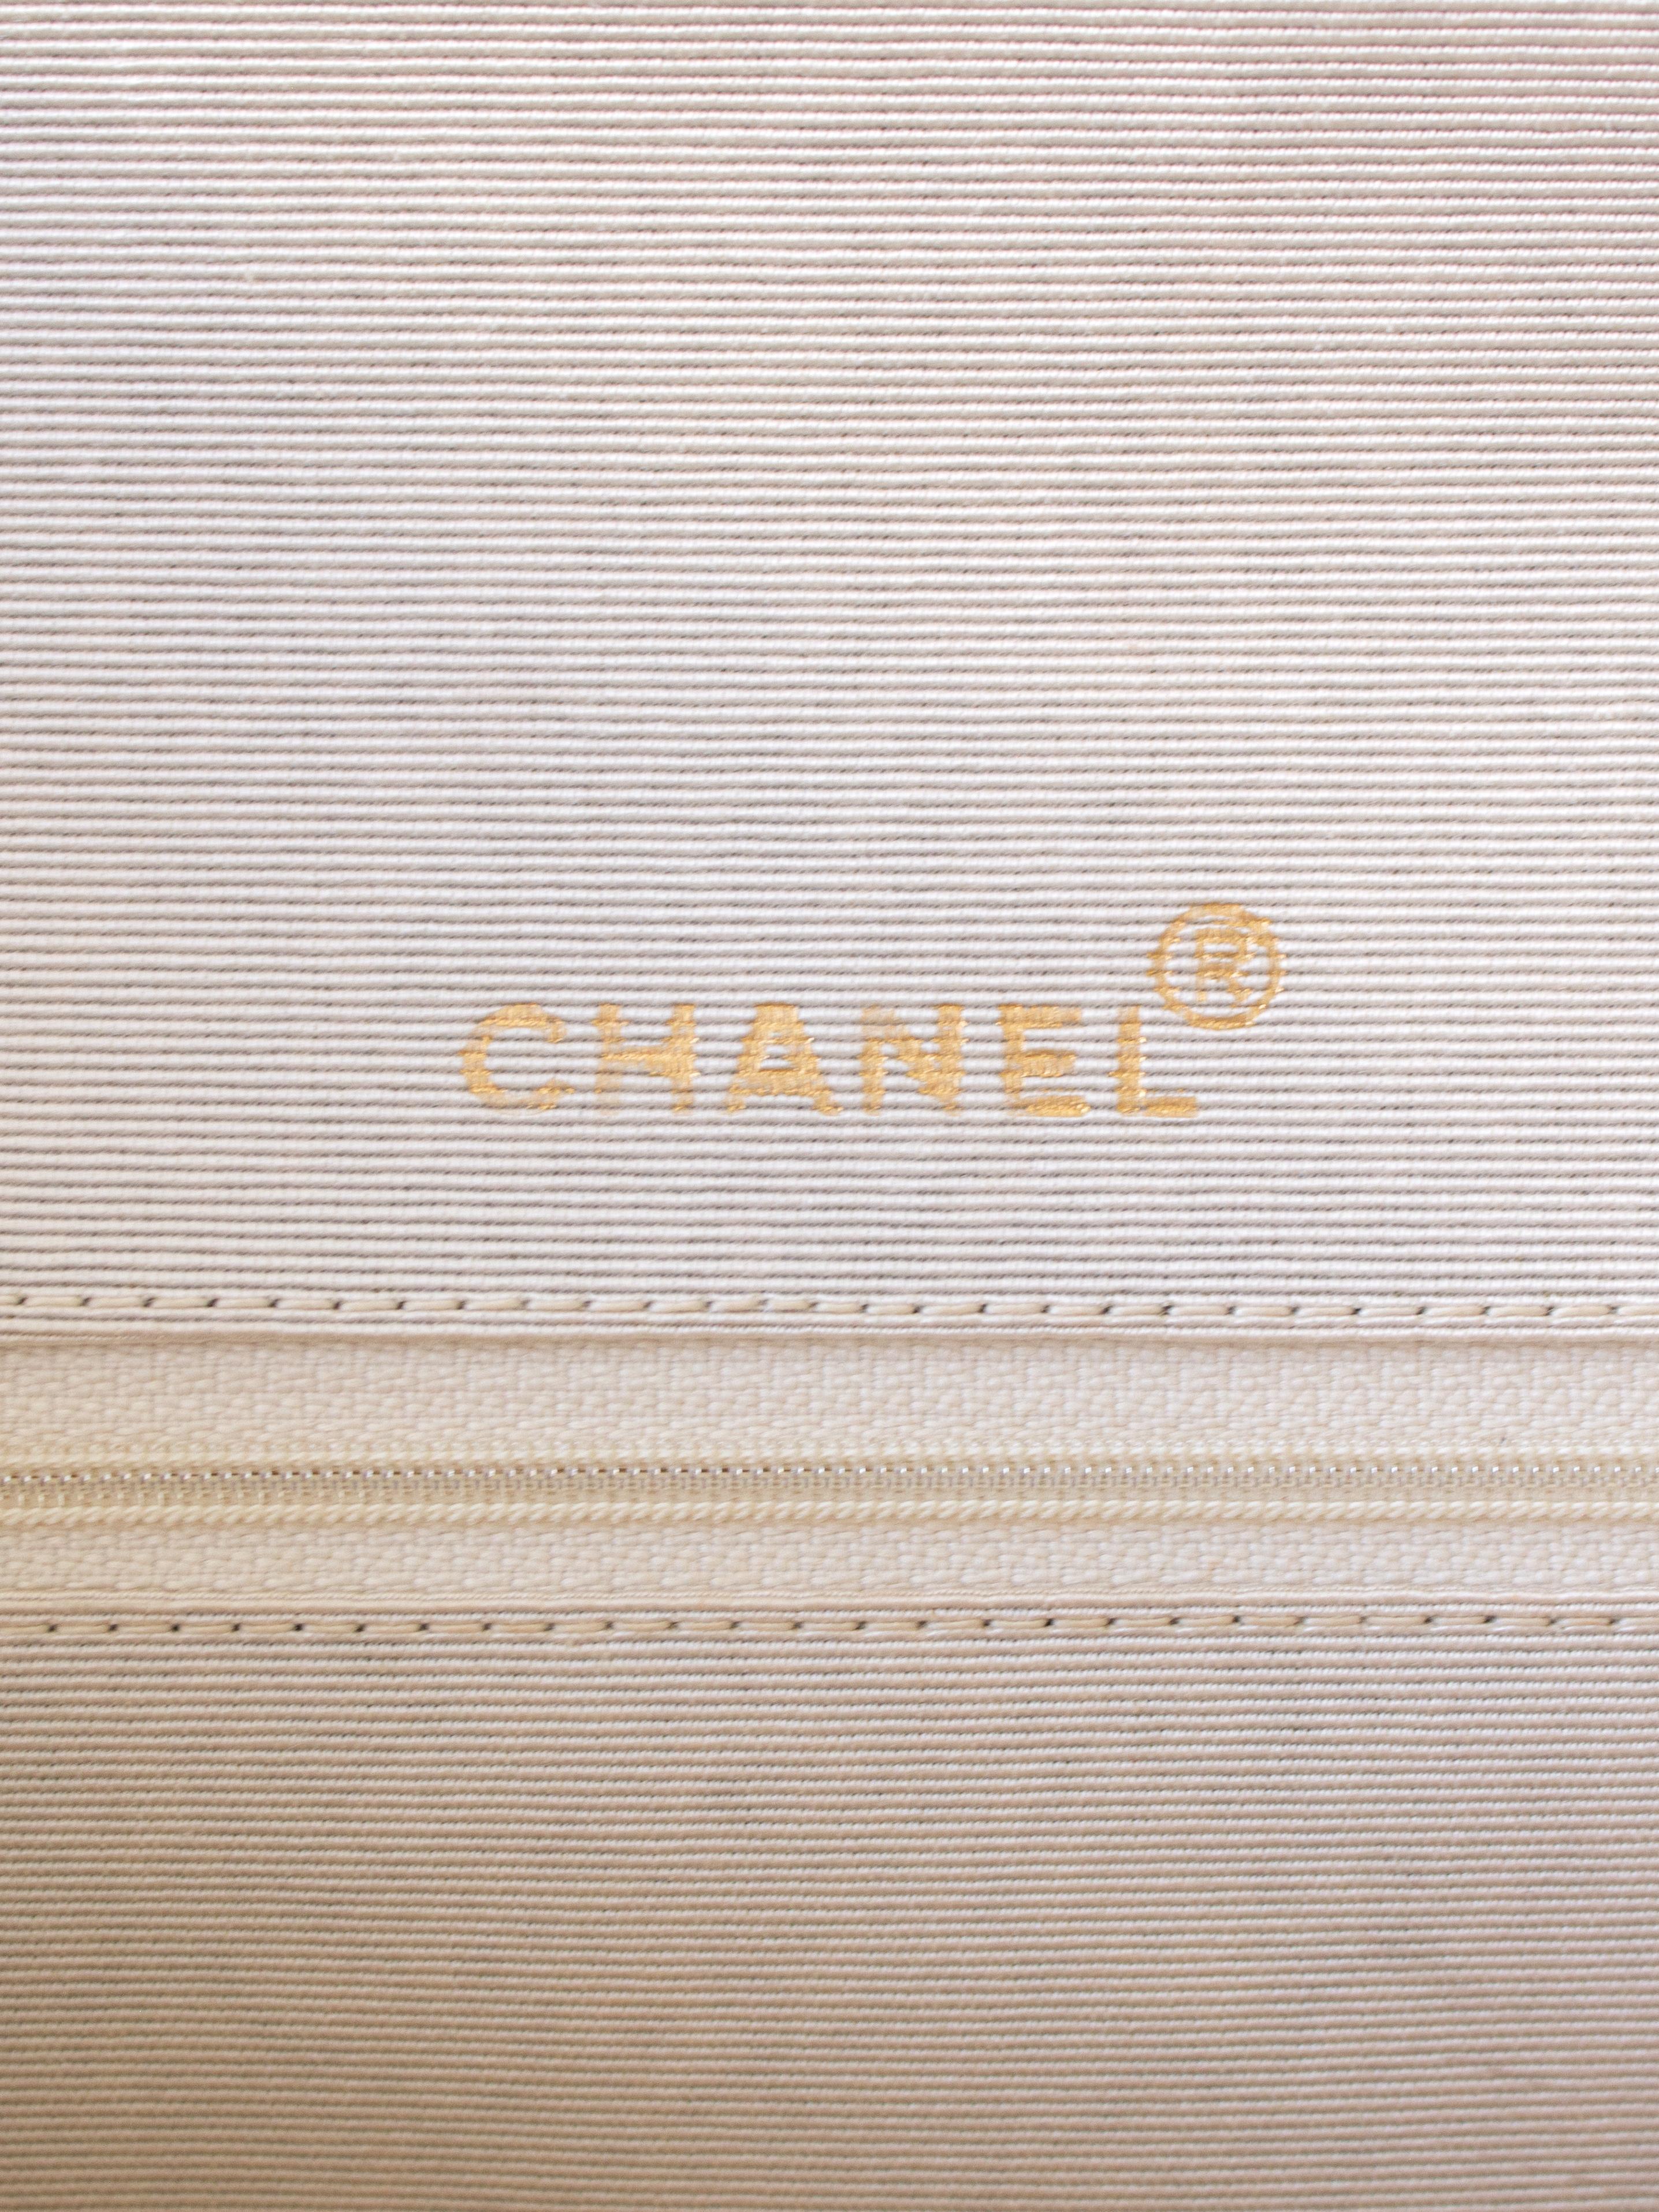 Rare Chanel Vintage S/S1991 Champagne Gold Sequin Medium Flap Bag 10